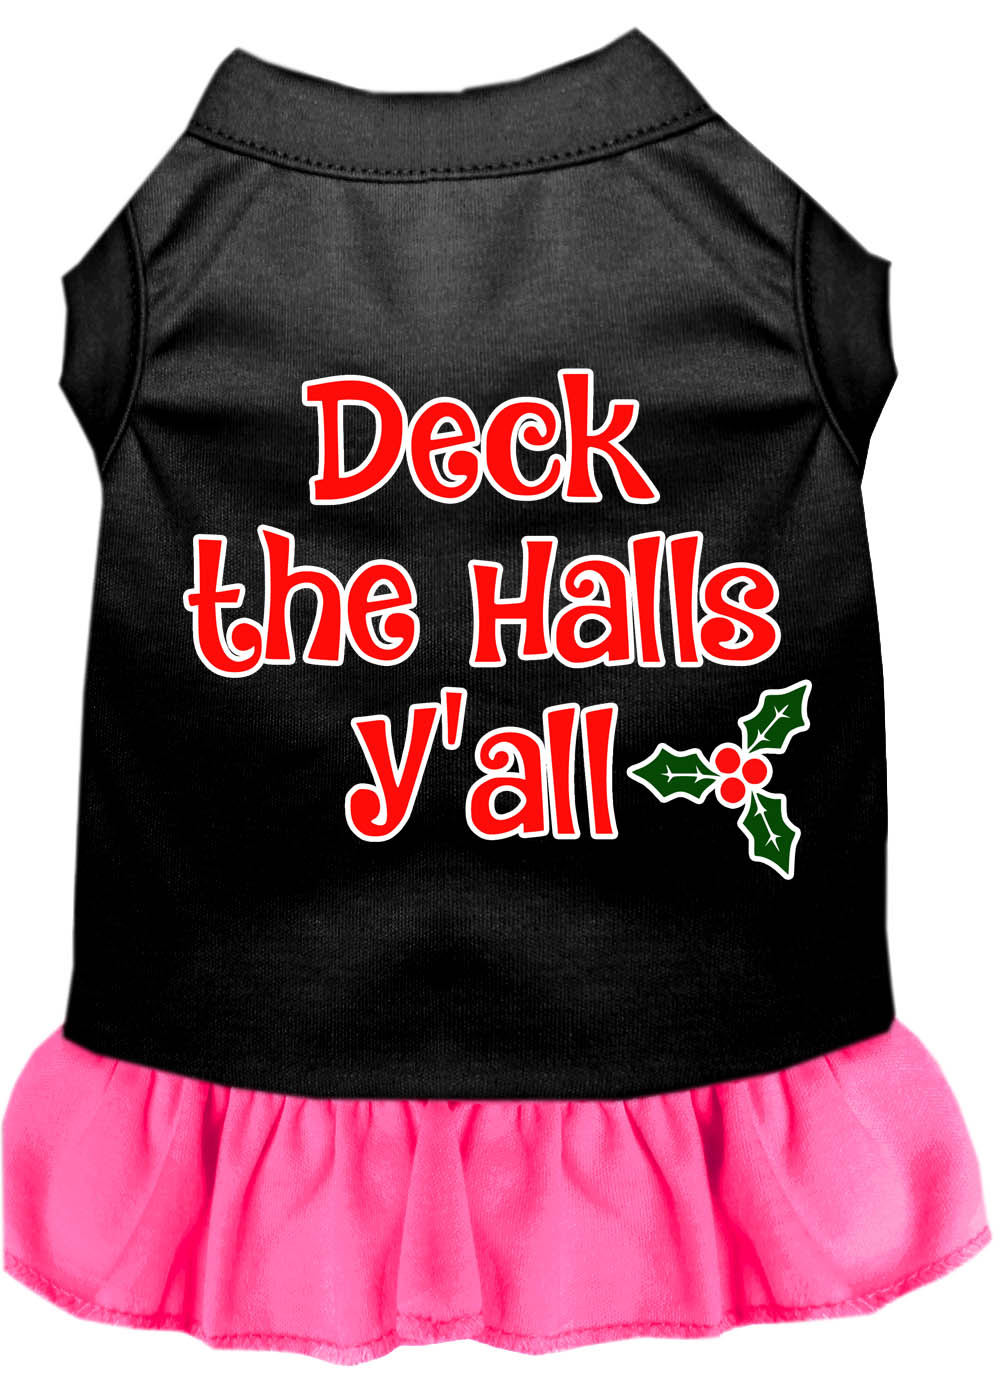 Deck the Halls Y'all Screen Print Dog Dress Black with Bright Pink XXXL